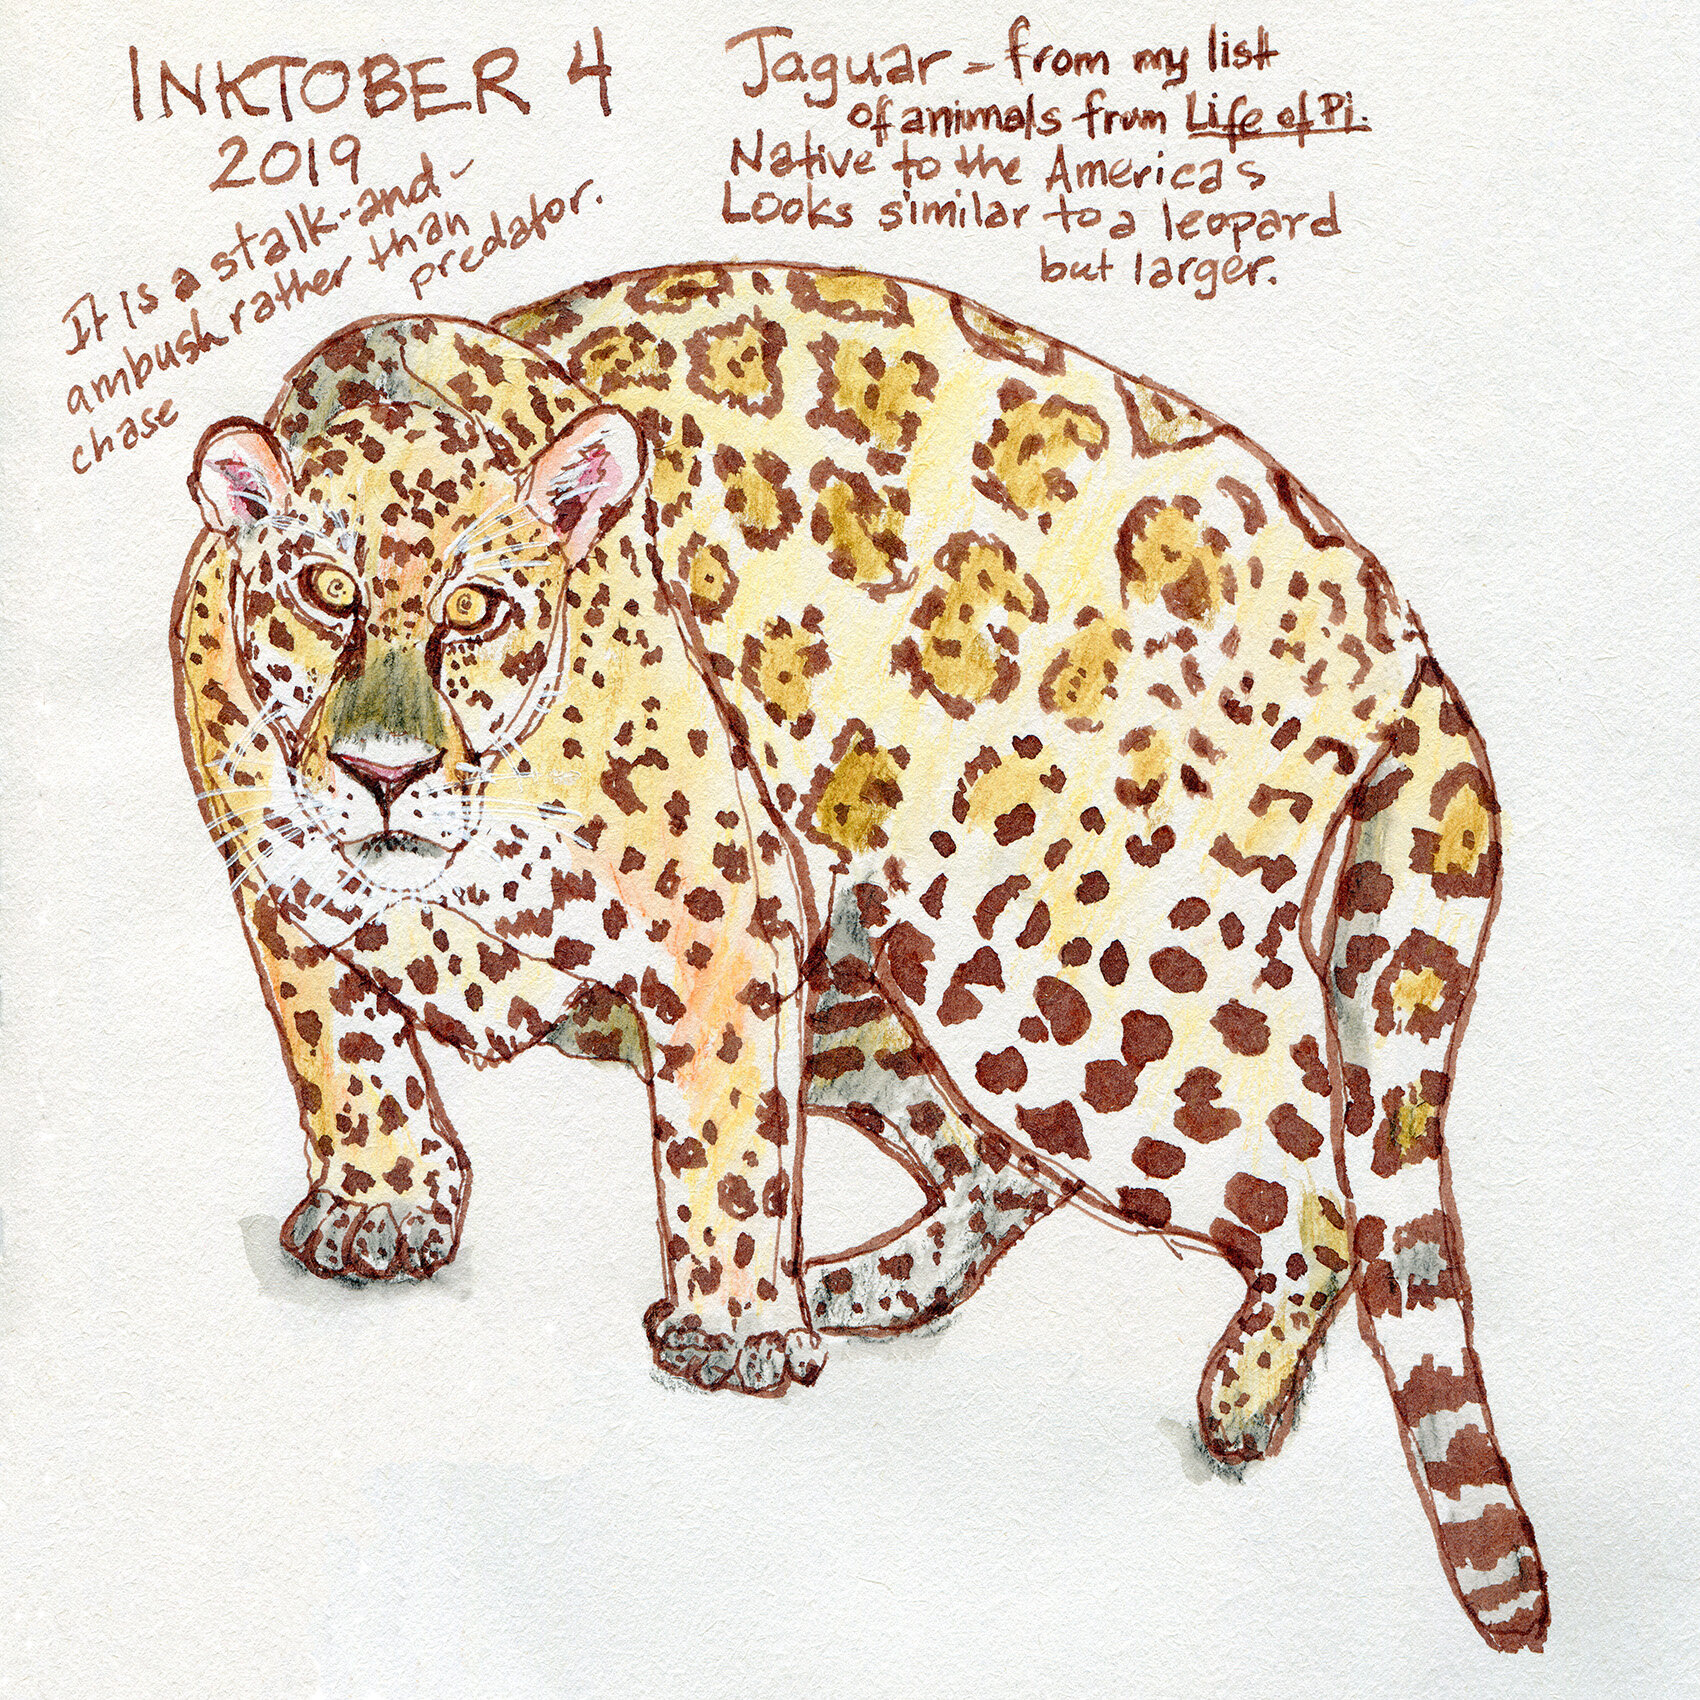 Inktober Day 4: a Jaguar